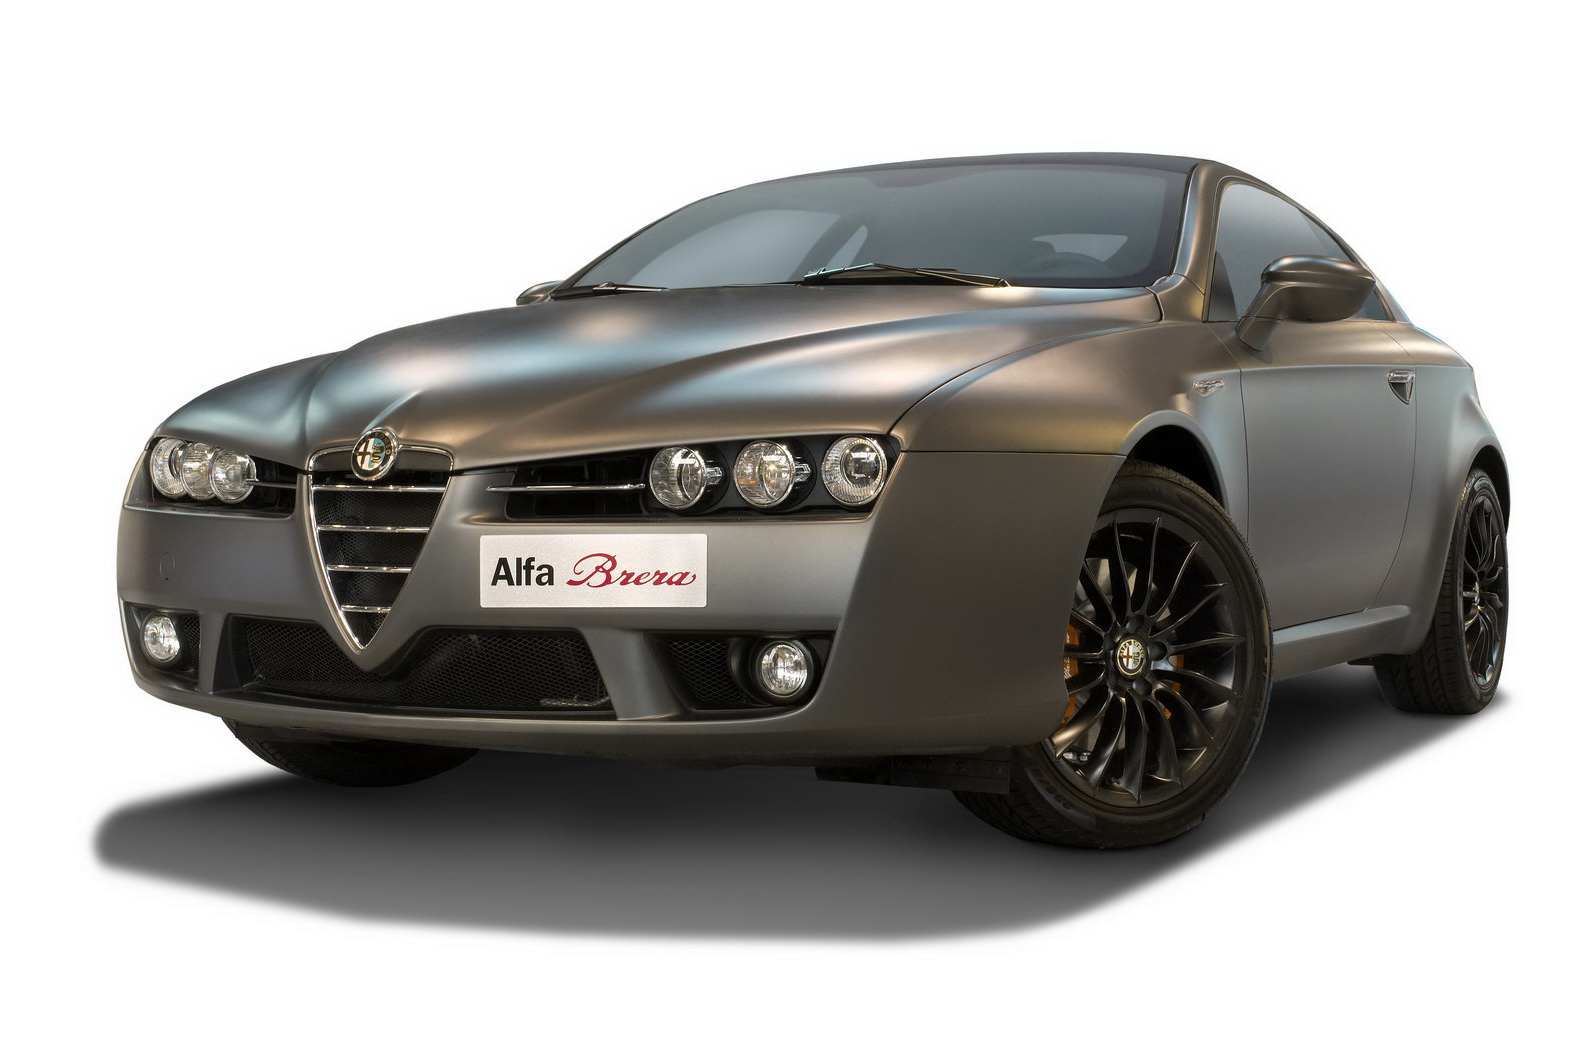 Alfa Romeo Brera Autopedia Fandom